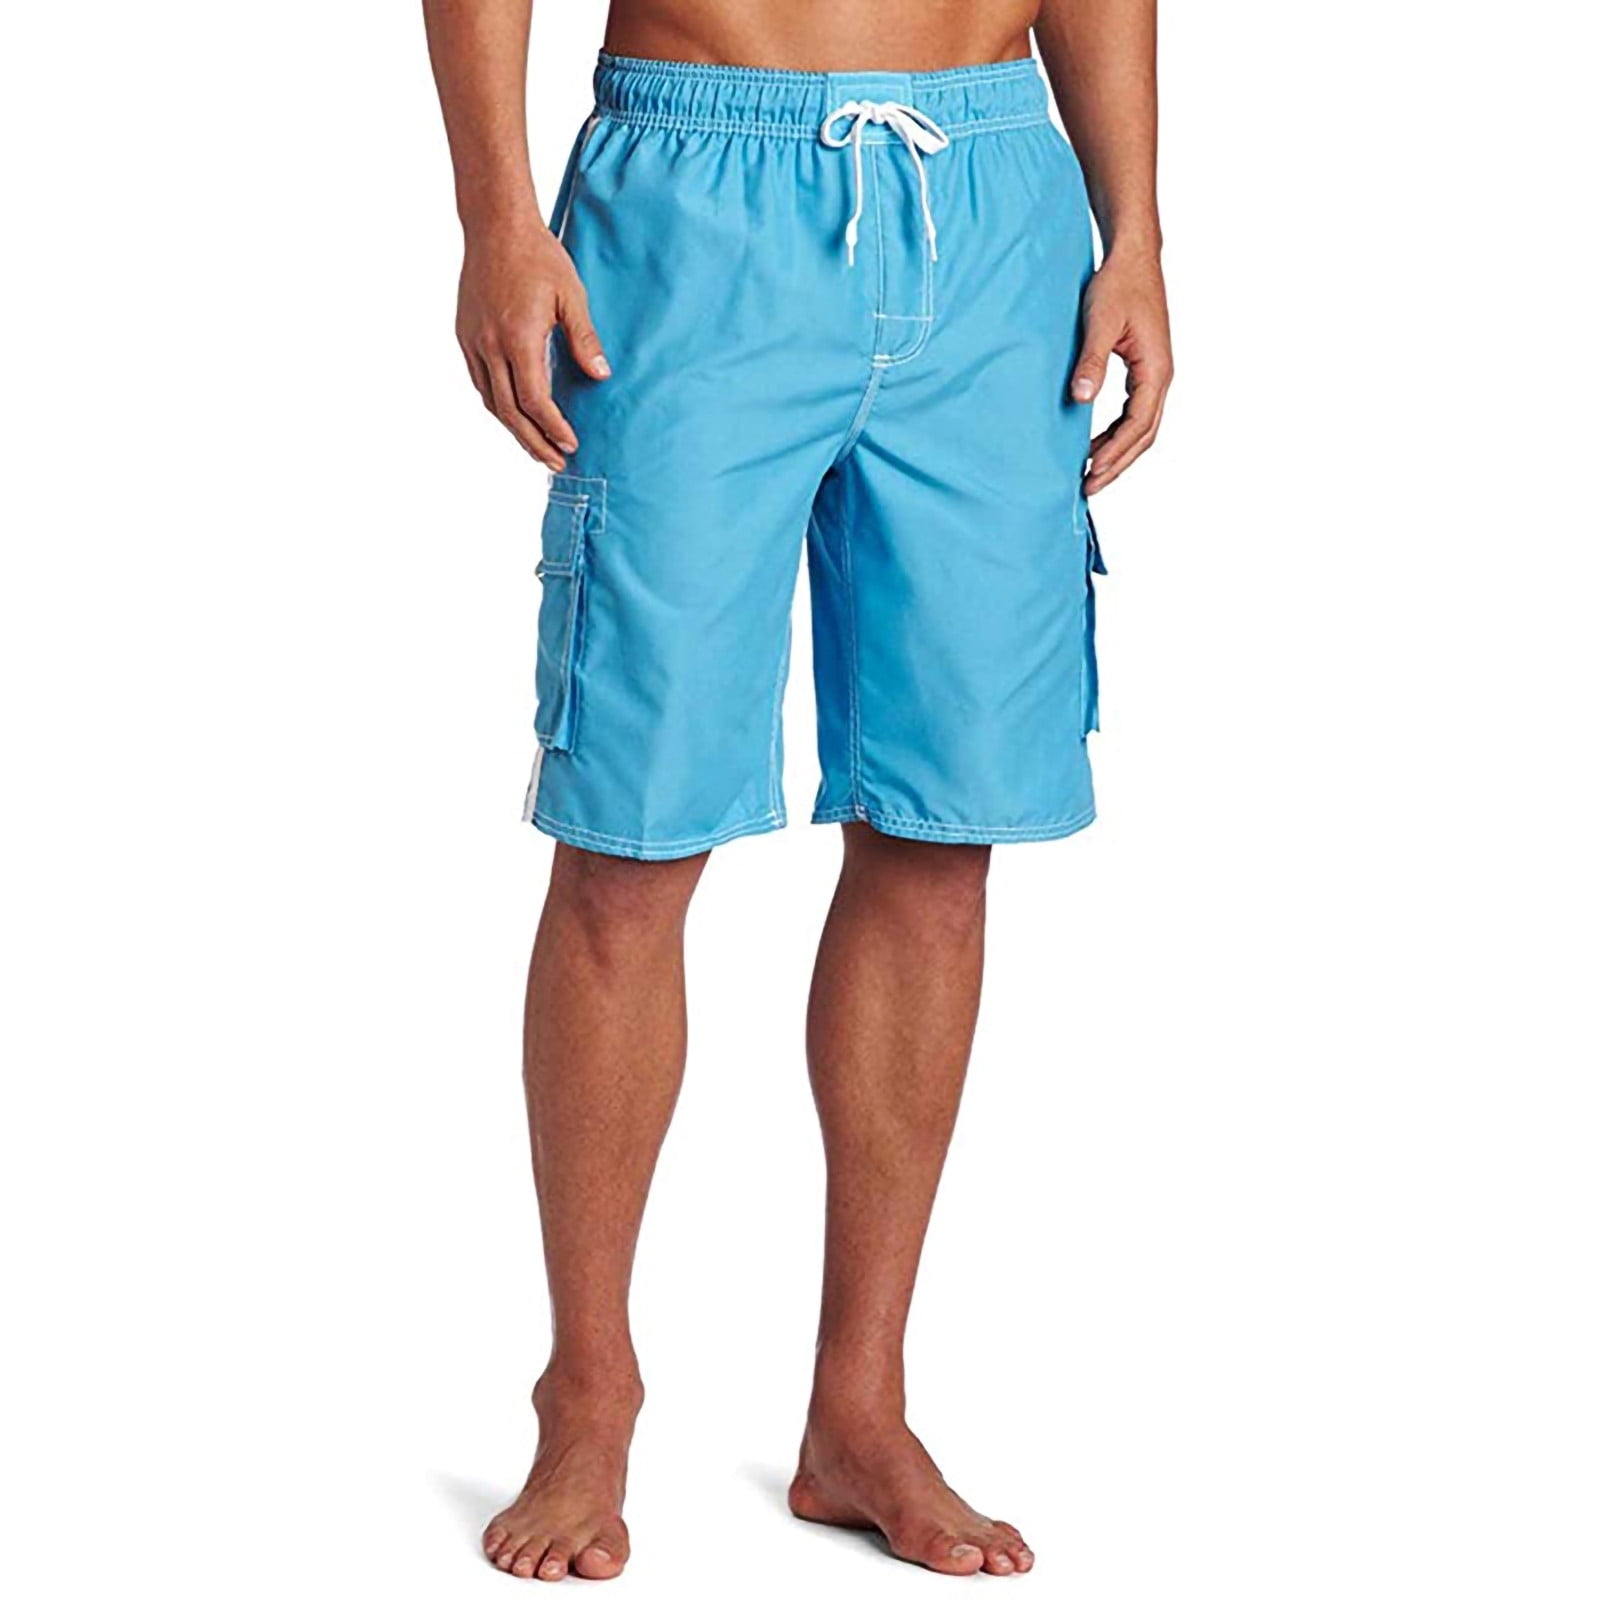 Men Swimwear Shorts,Hemlock Men Boy Camouflage Shorts Beach Trunks Briefs Pants Stretchy Printed Shorts 